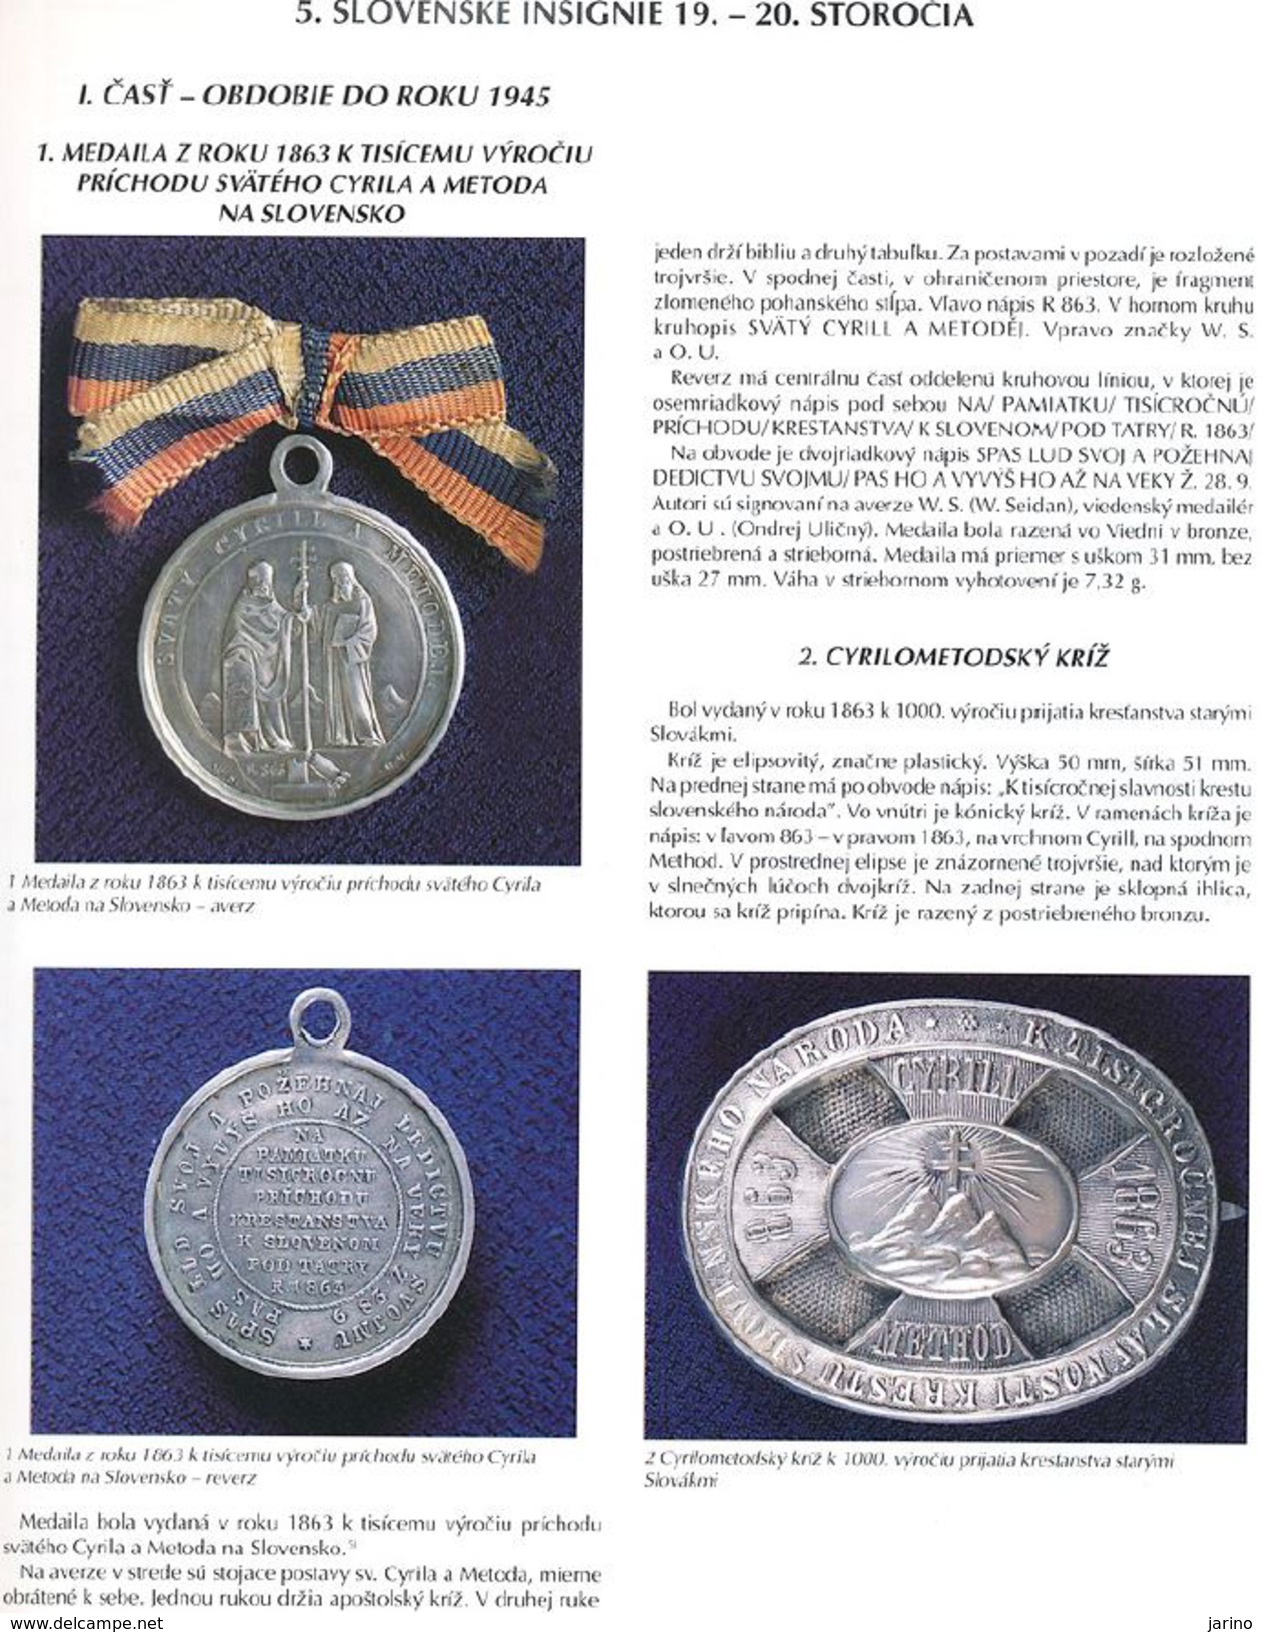 Slovak Council, Decorations And Badges Of Honor,119 Pages Sur DVD,Inhalt Slowakisch,Deutsch, Englisch Senden Auf Anfrage - Other & Unclassified